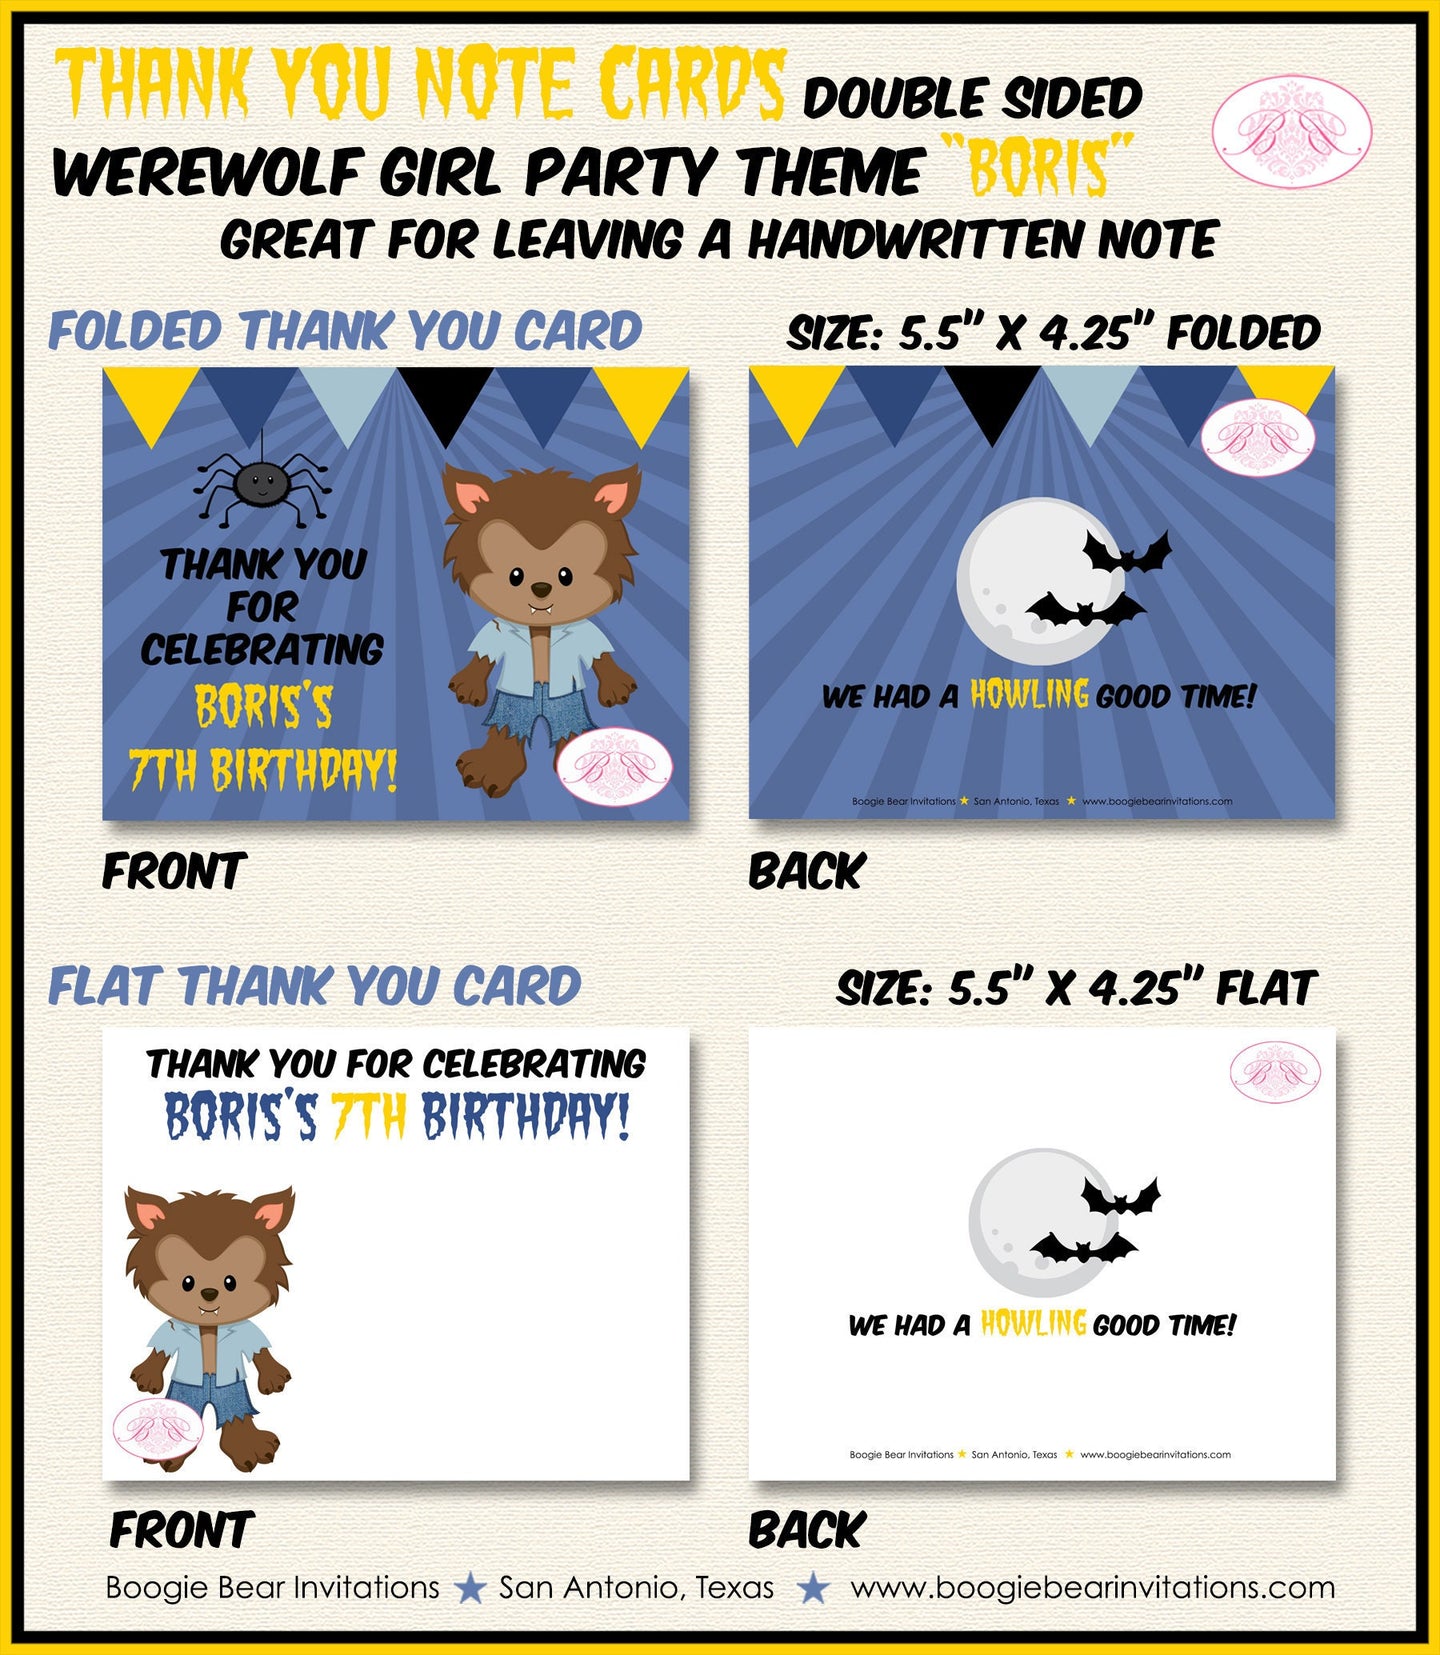 Werewolf Boy Party Thank You Card Note Birthday Full Moon Black Bat Spider Yellow Blue Halloween Boogie Bear Invitations Boris Theme Printed